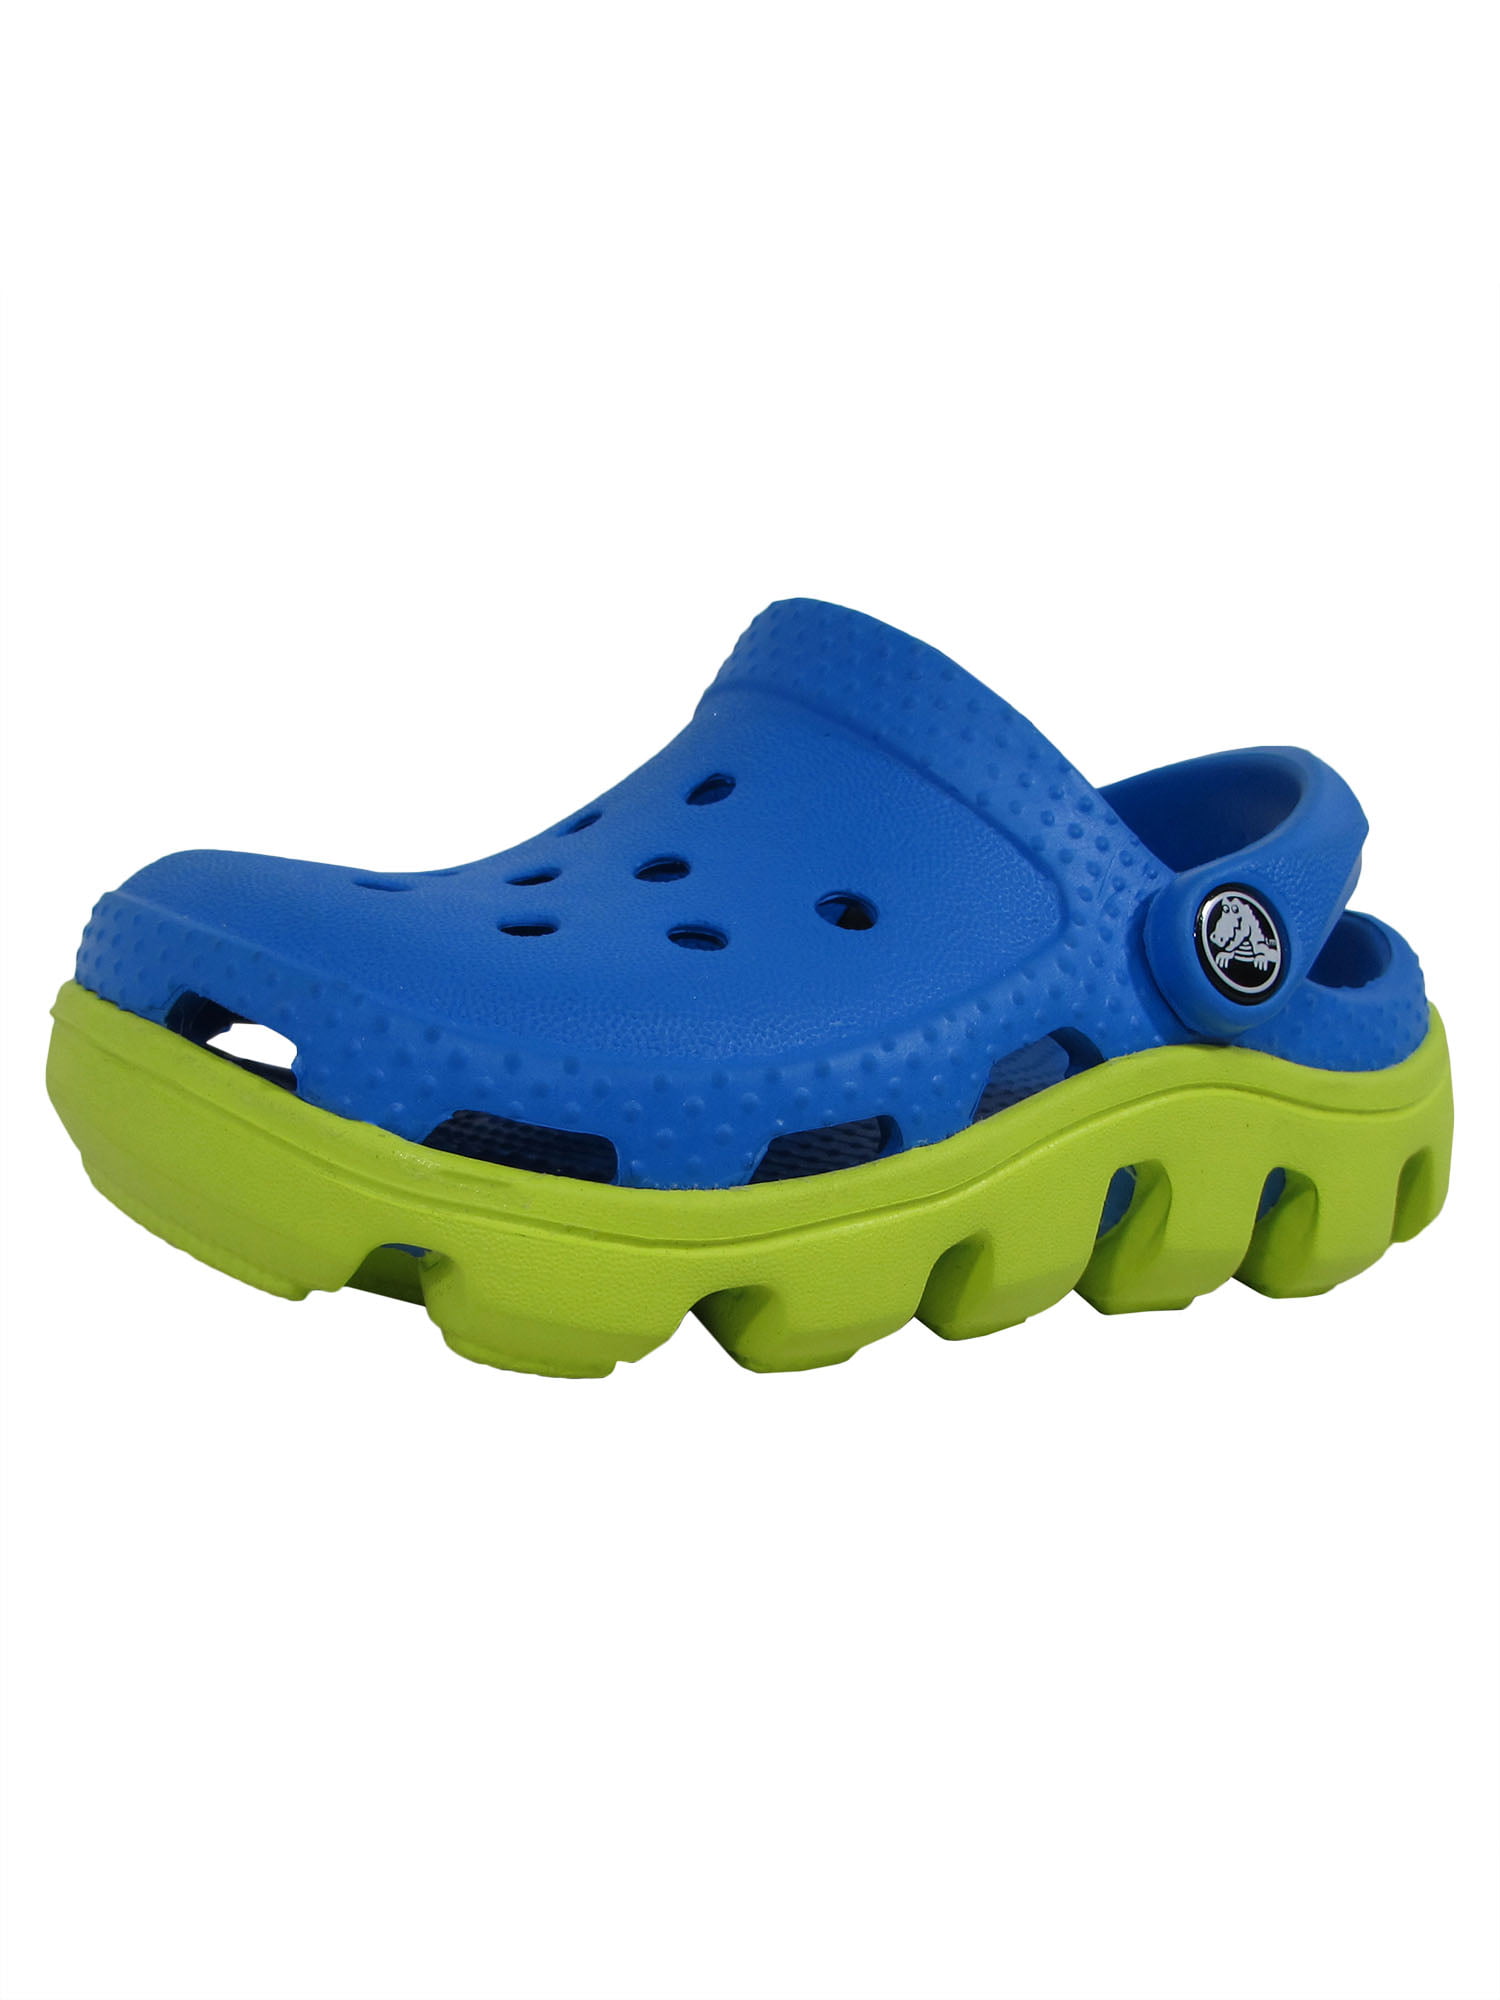 population grass India Crocs Kids Duet Sport Clog Shoes, Ocean/Citrus, US 10/11 Little Kid -  Walmart.com